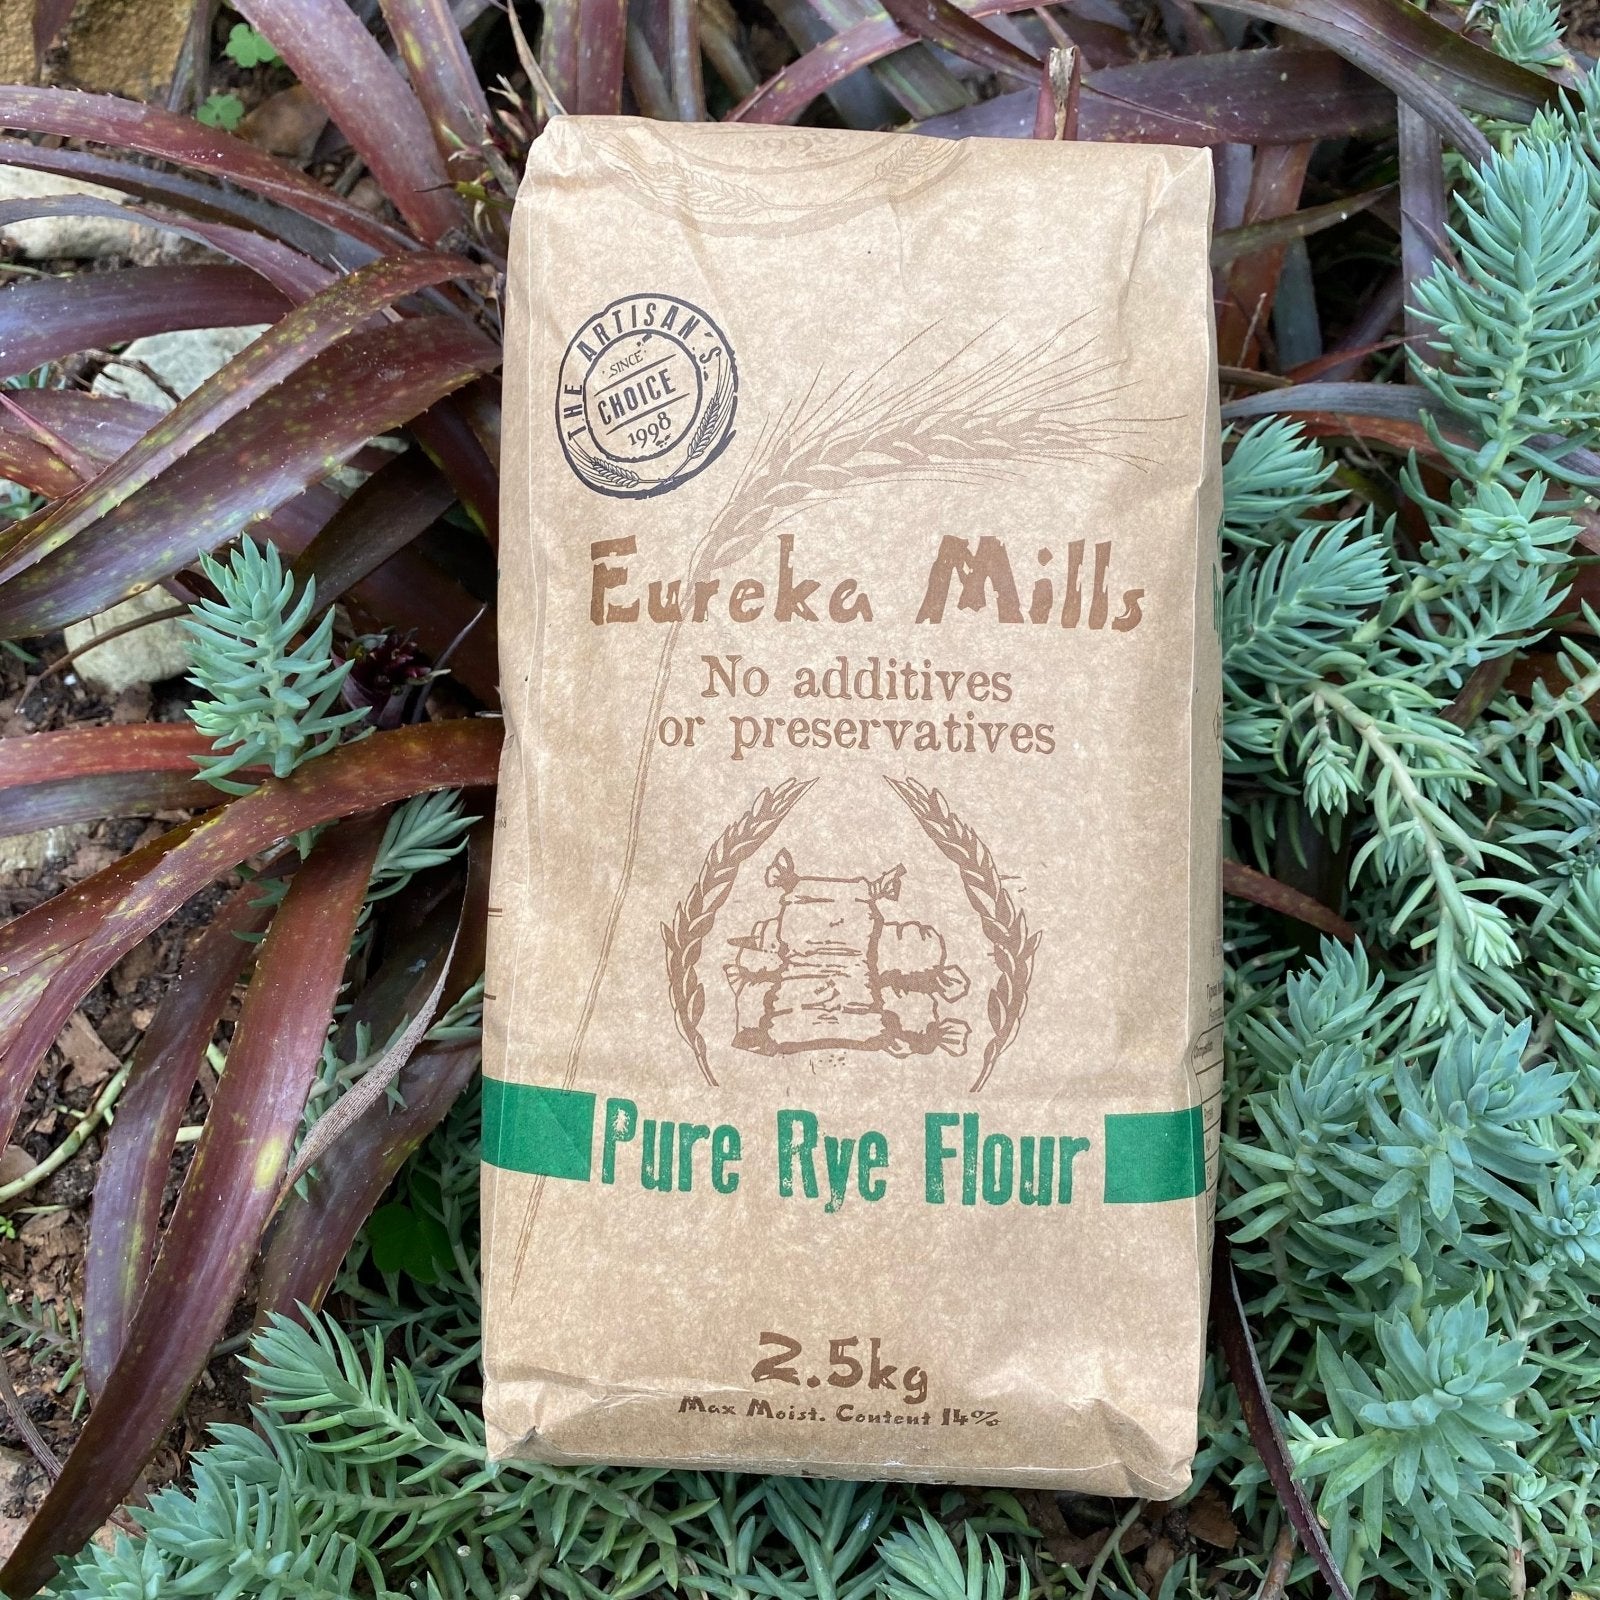 Eureka Mills Stone Ground Pure Rye Flour (2.5kg) - The Deli